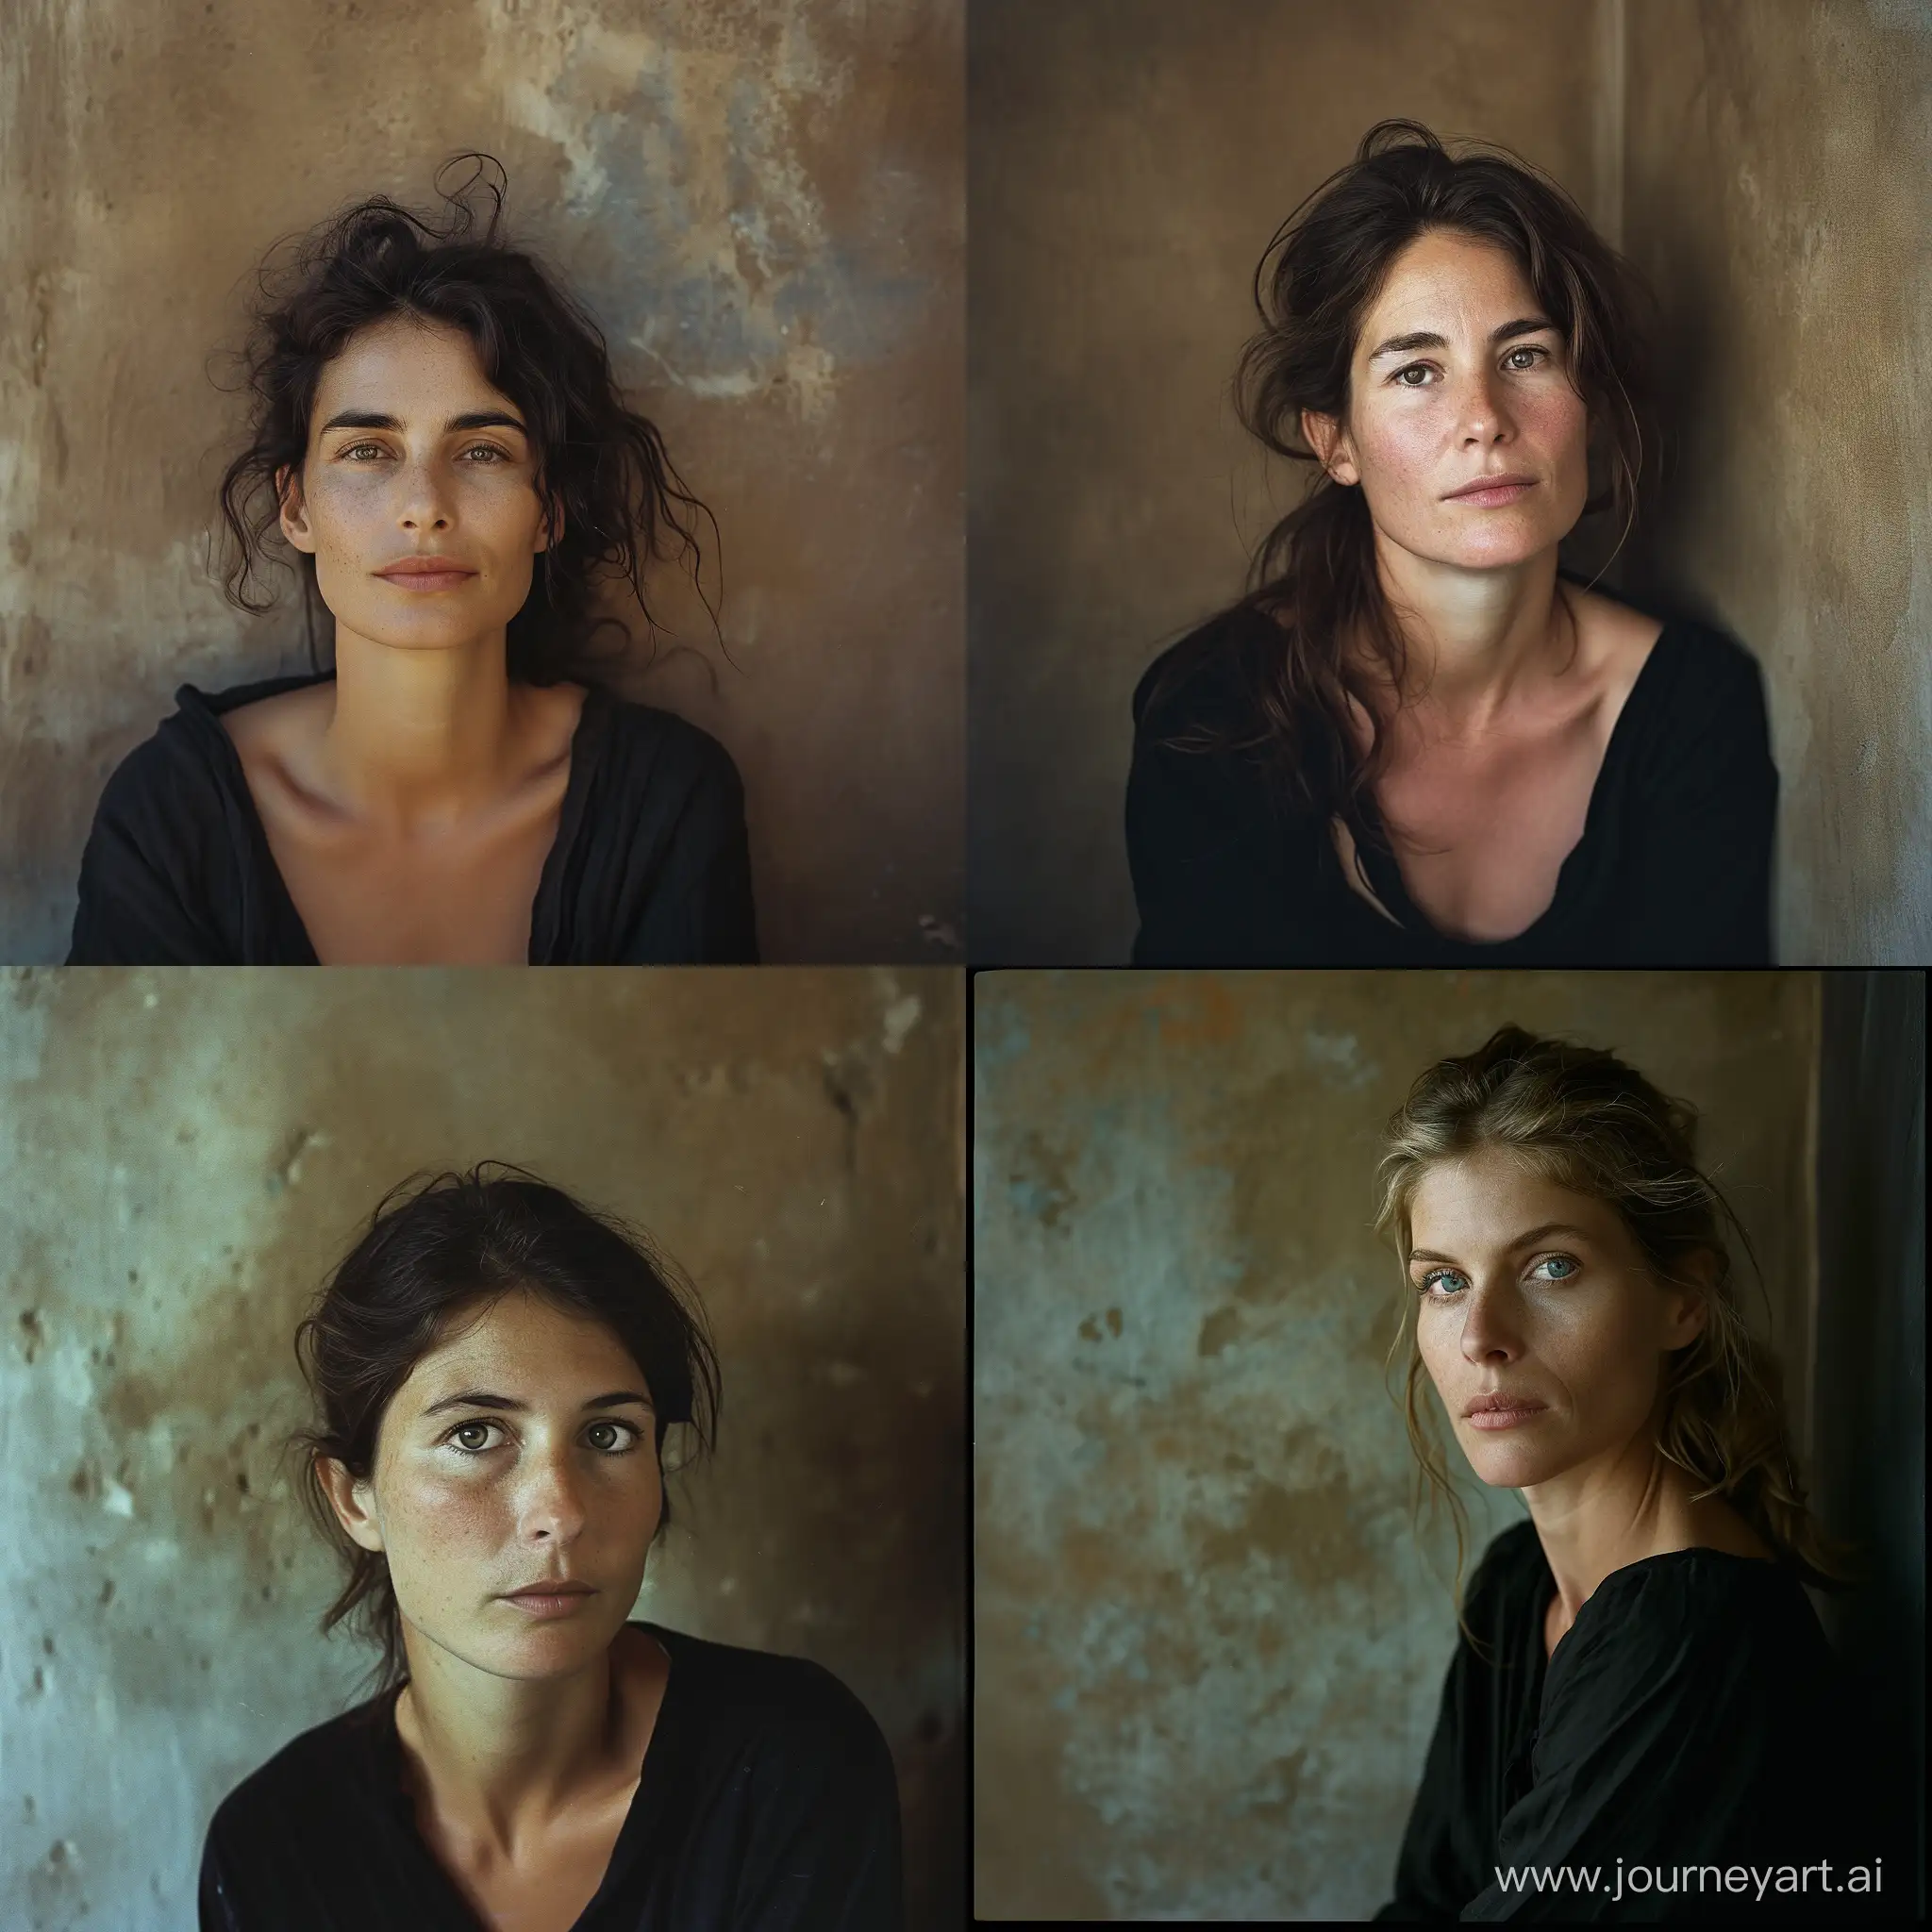 Tranquil-Italian-Woman-Portrait-Against-Warm-Brown-Wall